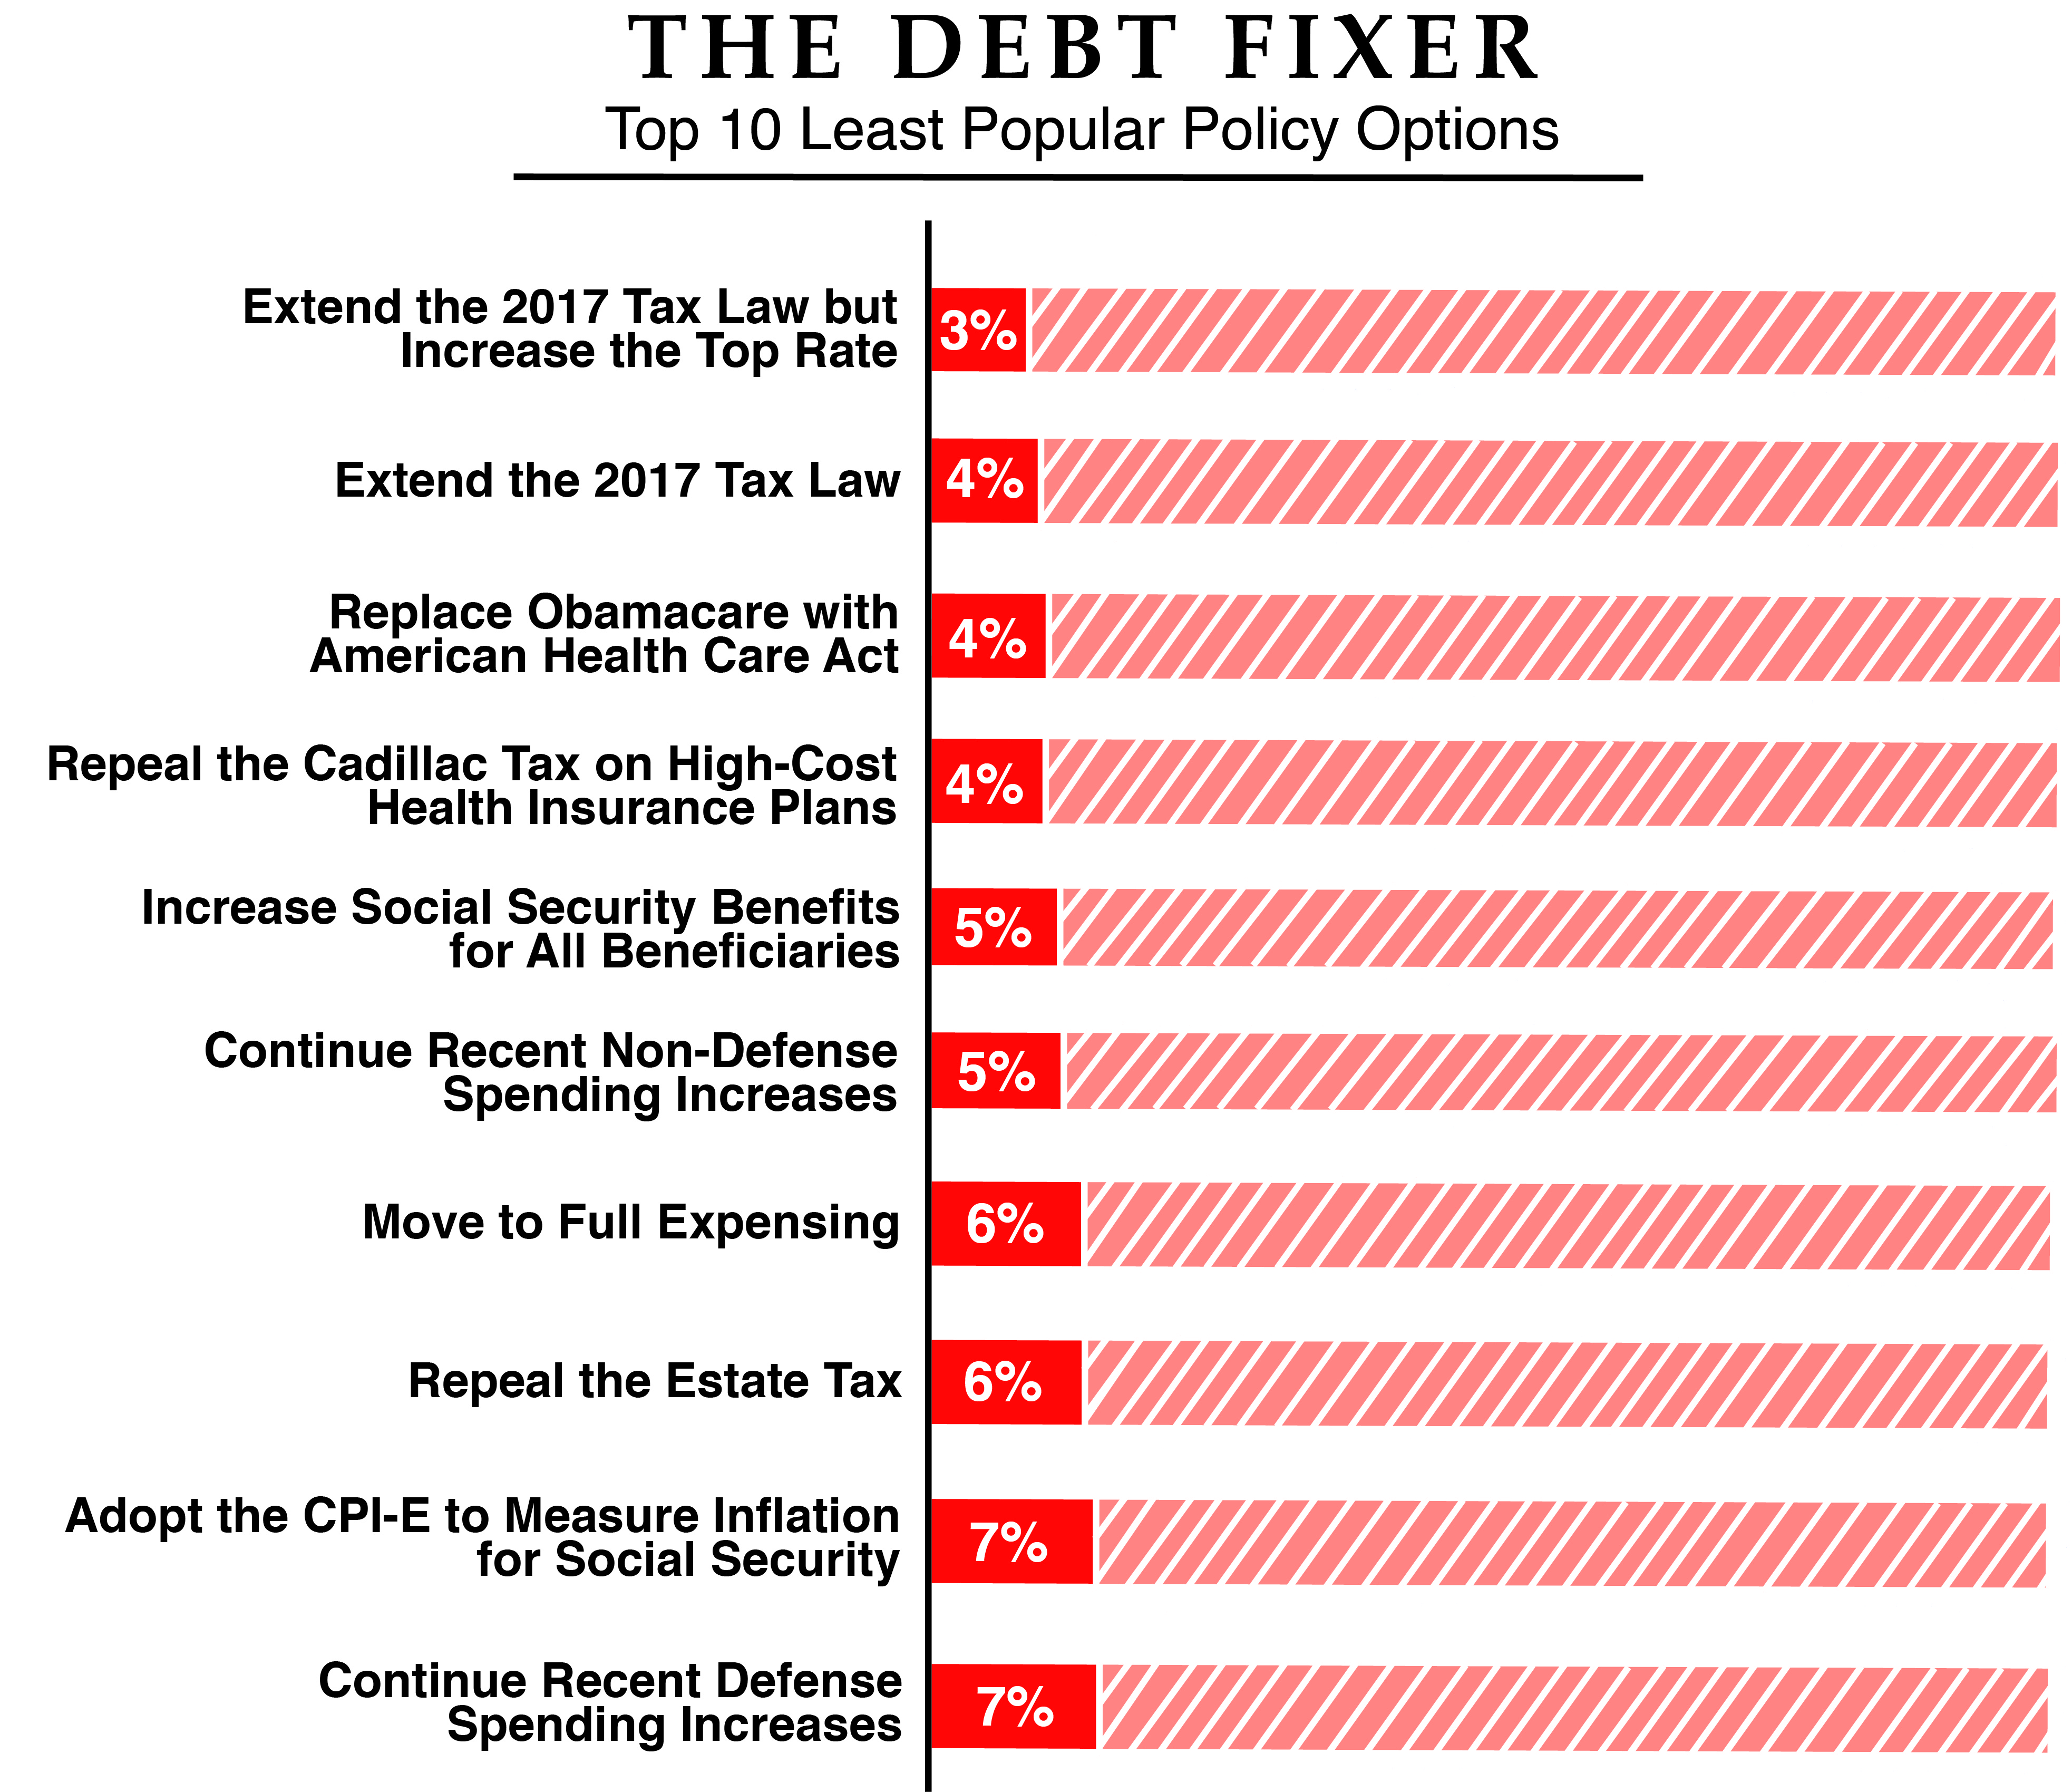 Debt Fixer budget tool least popular options